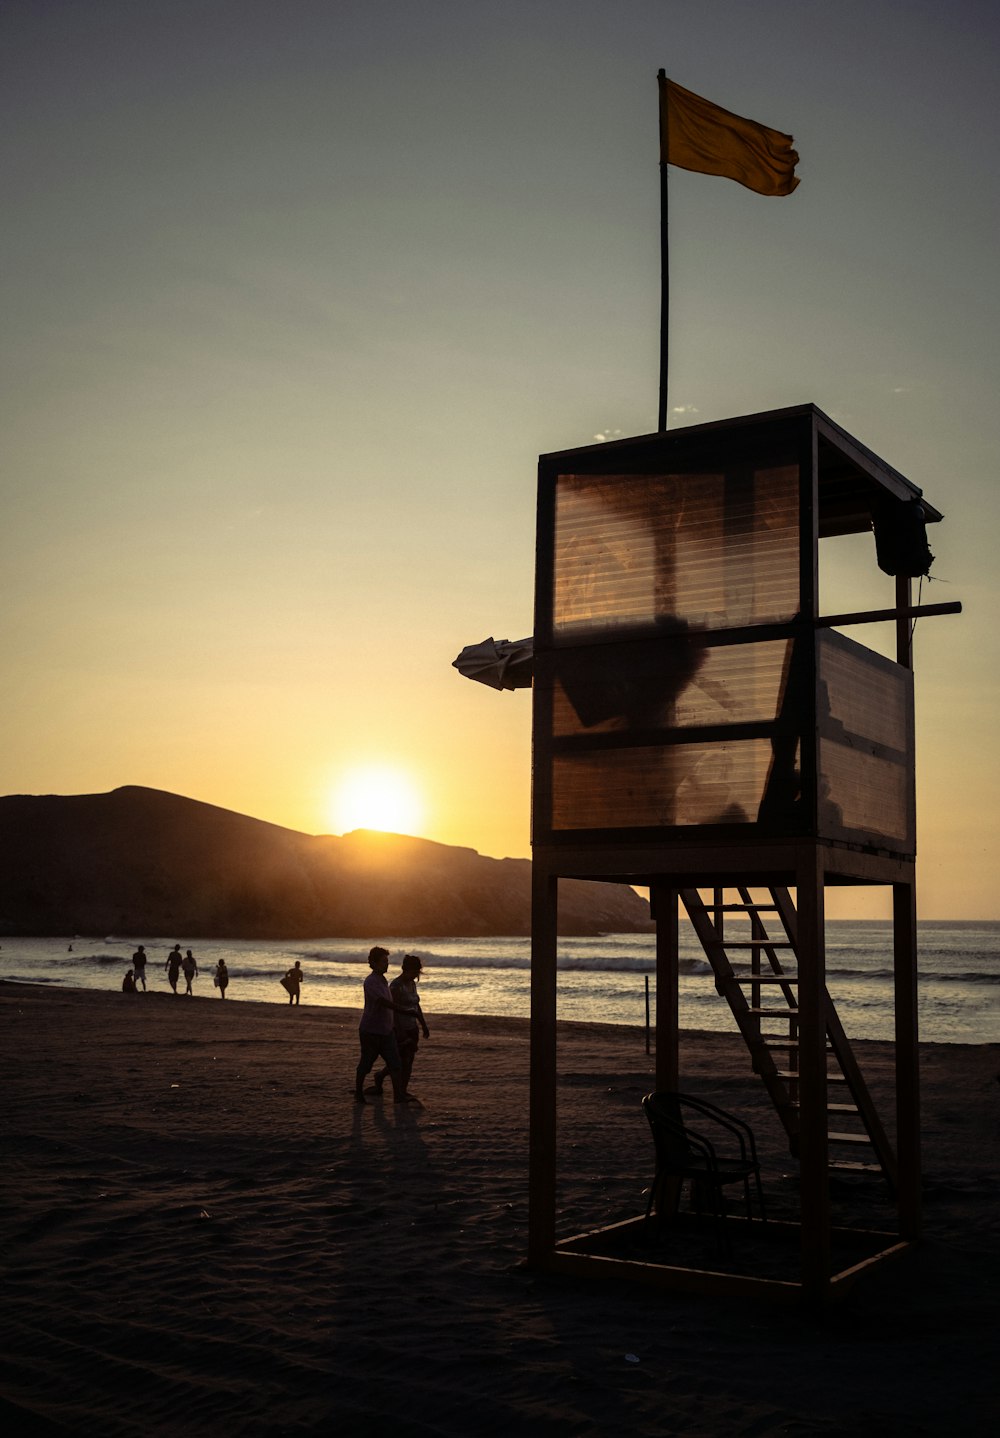 a lifeguard tower on a beach at sunset